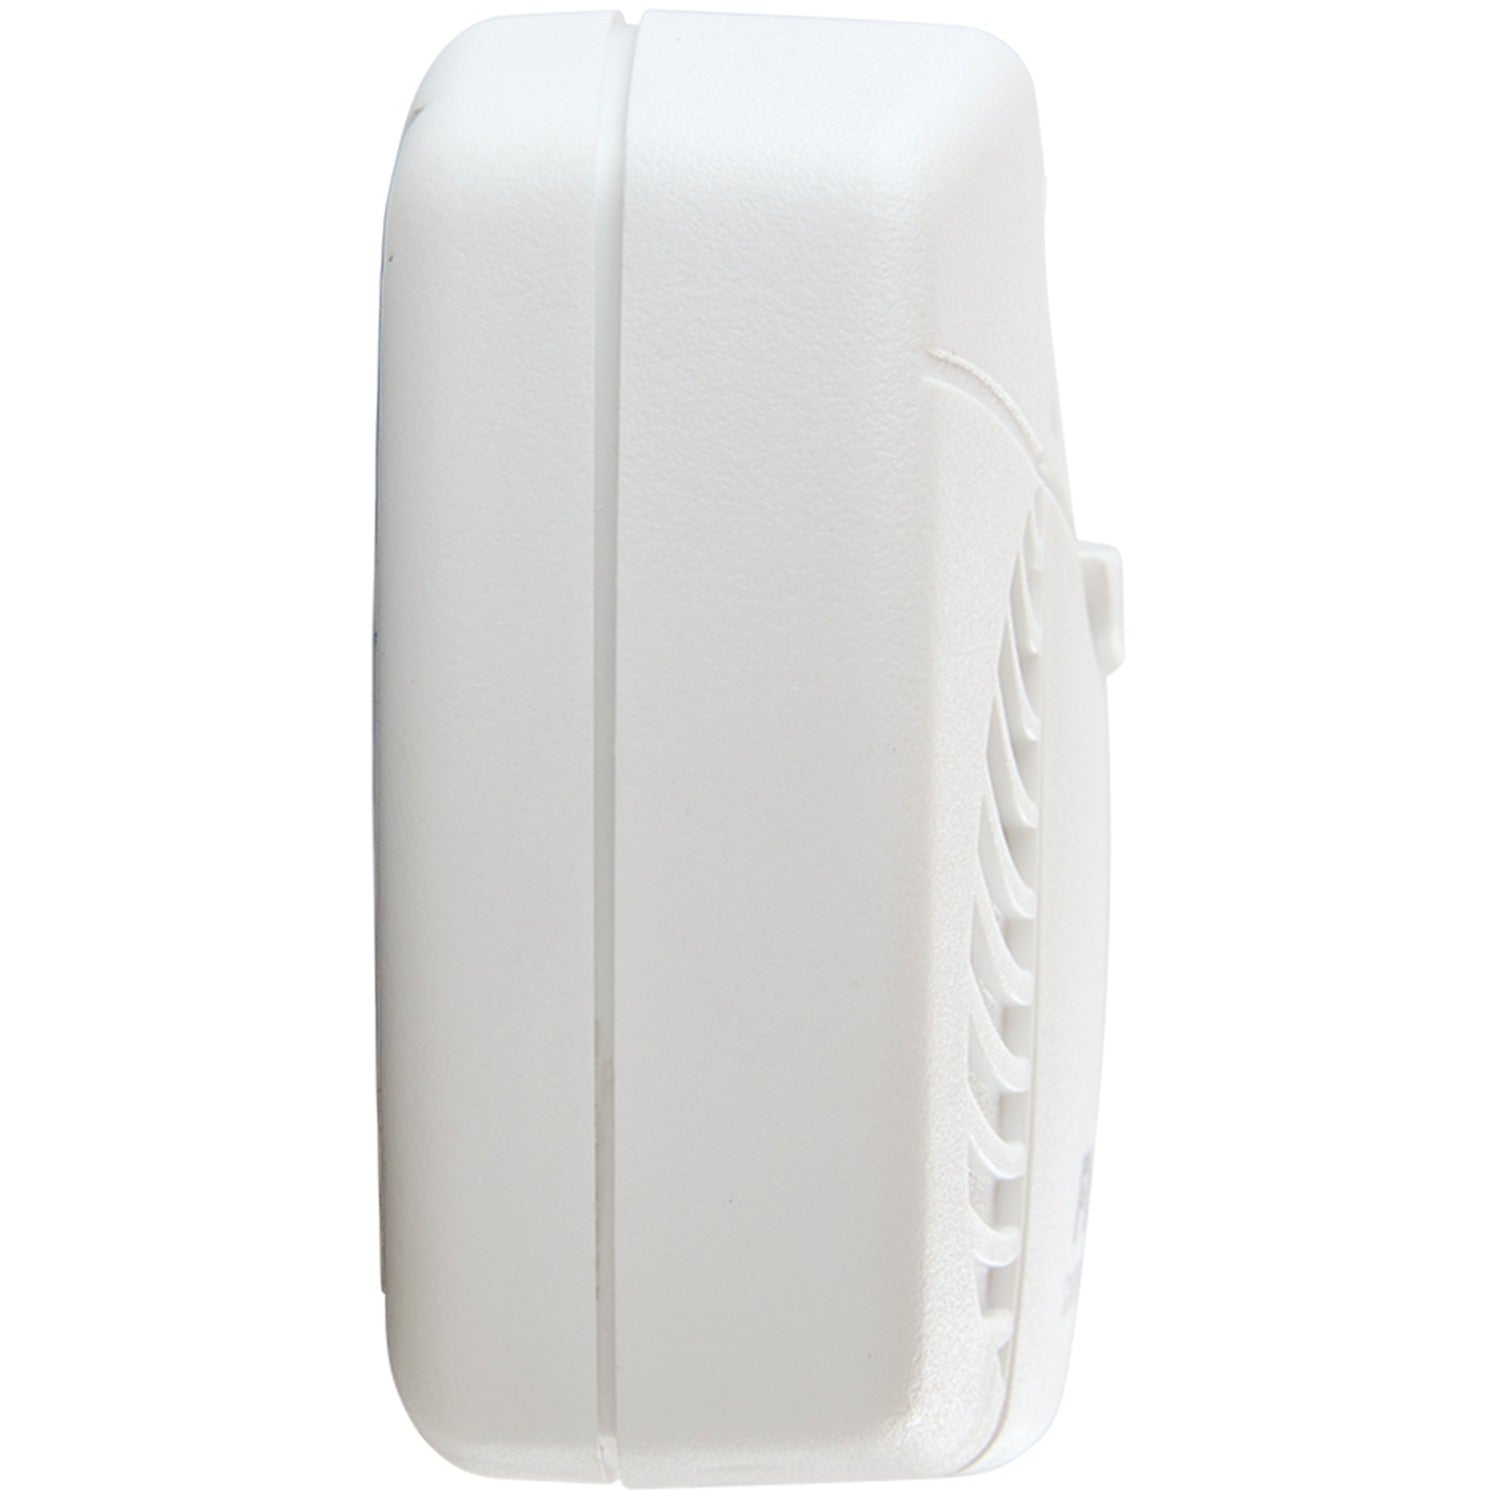 First Alert 1039727 Battery-Powered Carbon Monoxide Alarm with Backlit Digital Display